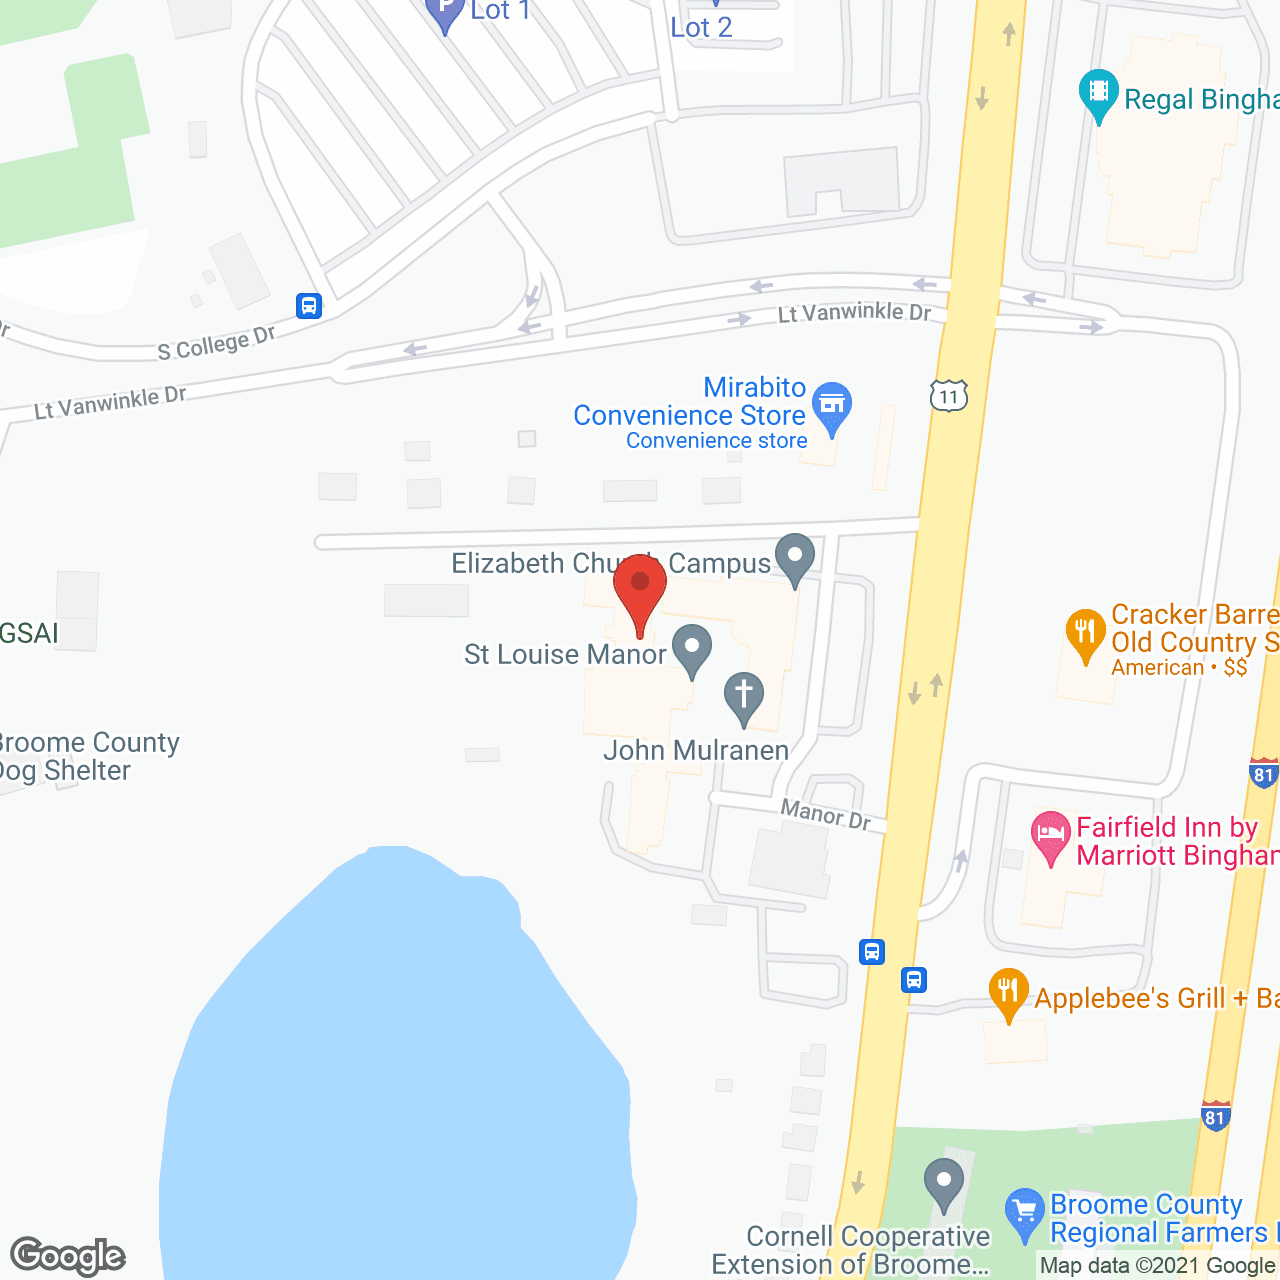 United Methodist Homes Elizabeth Church Campus in google map